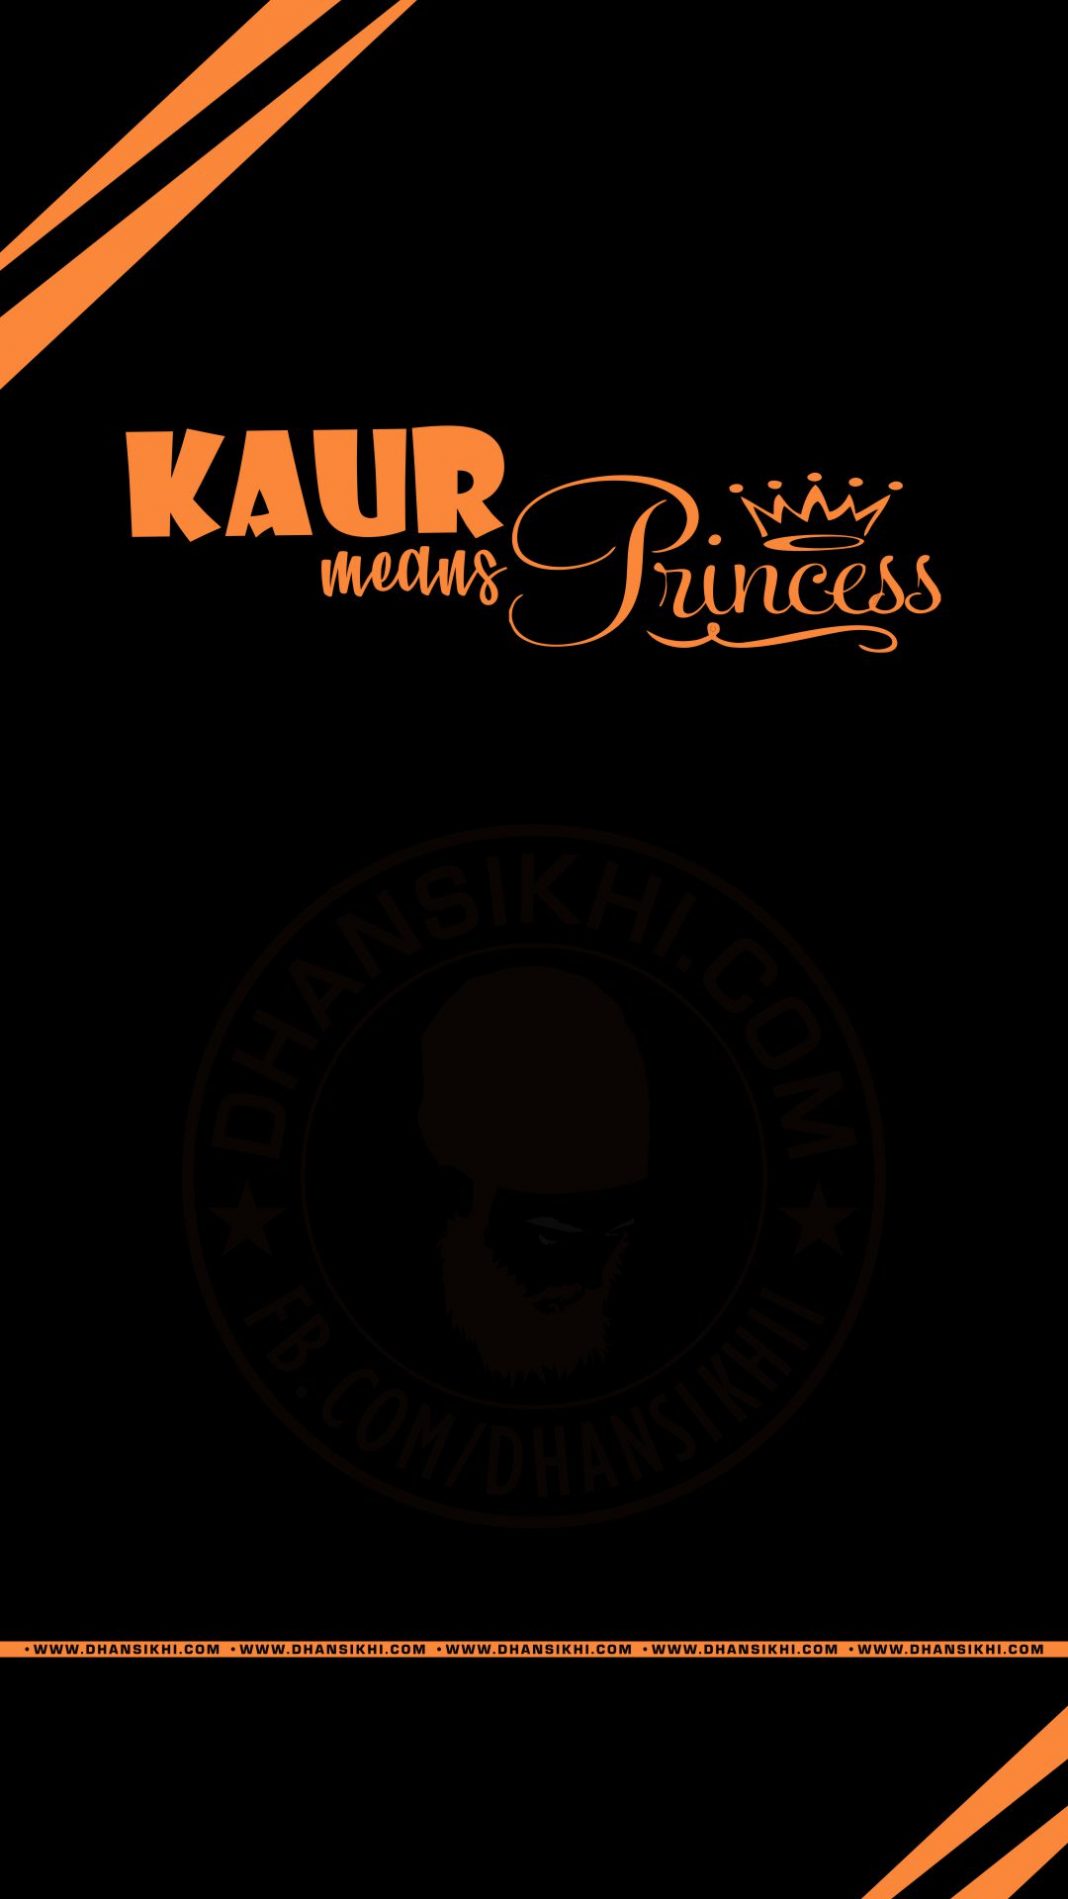 Mobile Wallpaper - Kour Means Princess